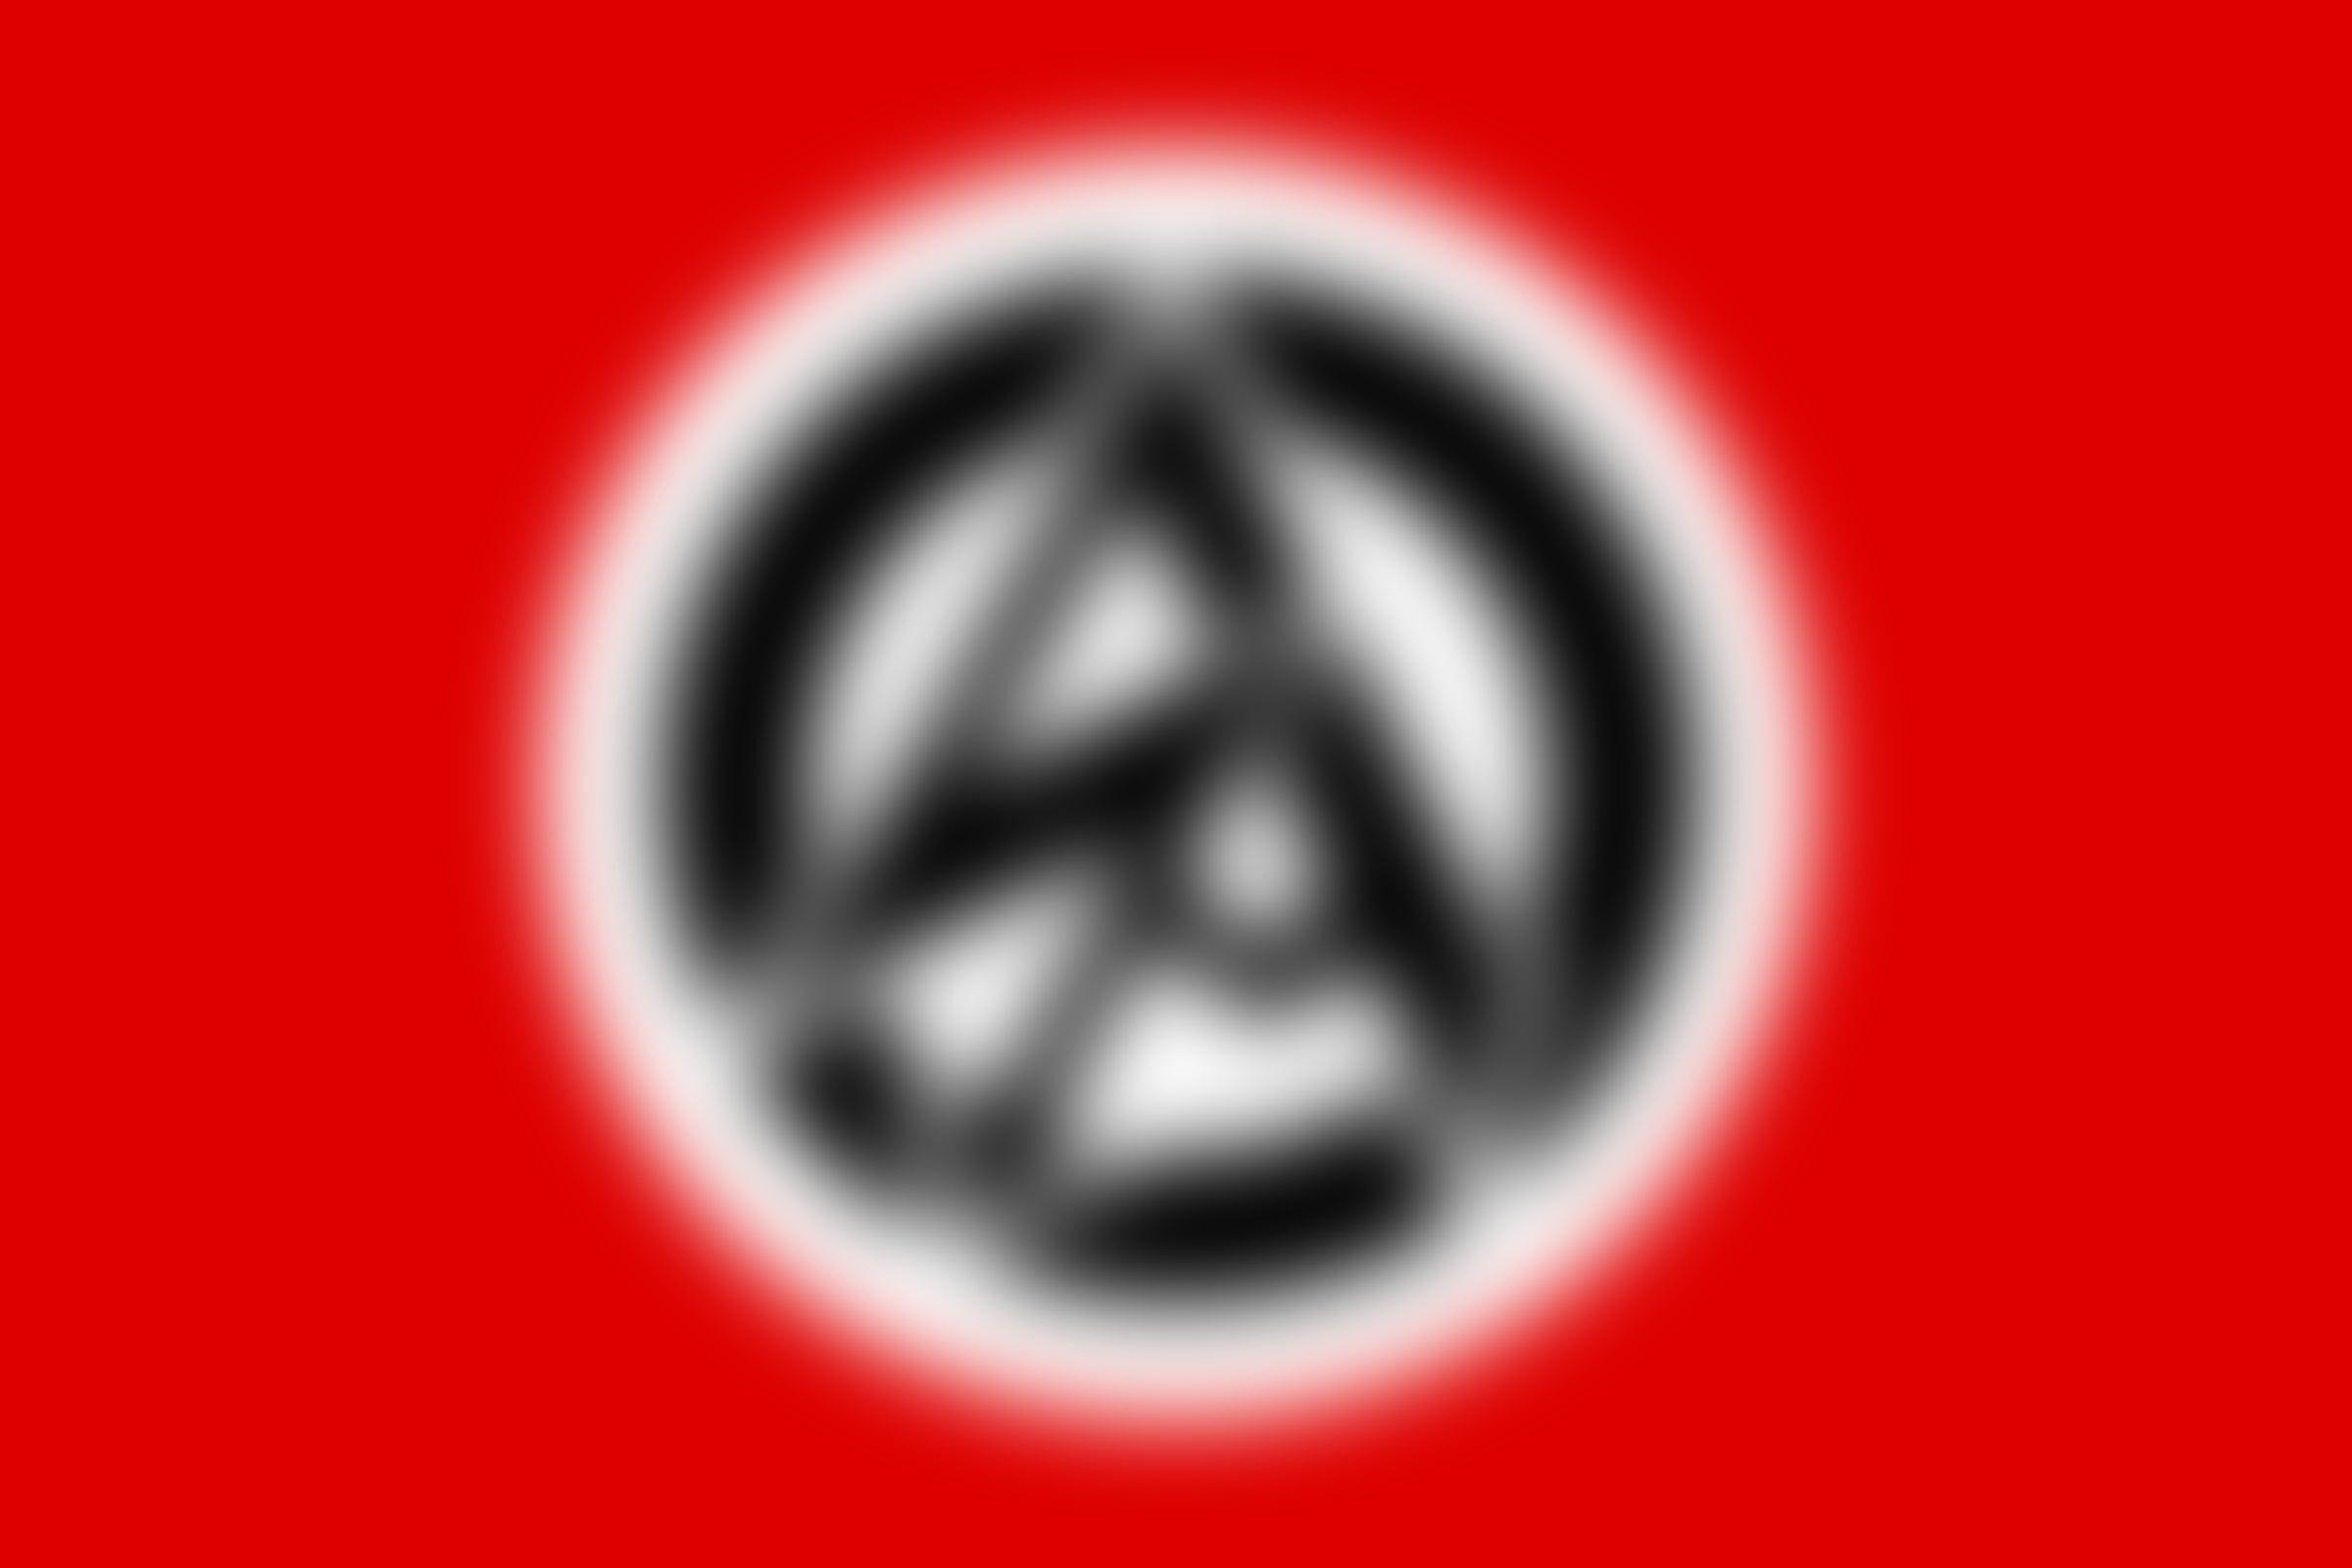 Sturmabteilung Logo - Sturmabteilung Flag : vexillology